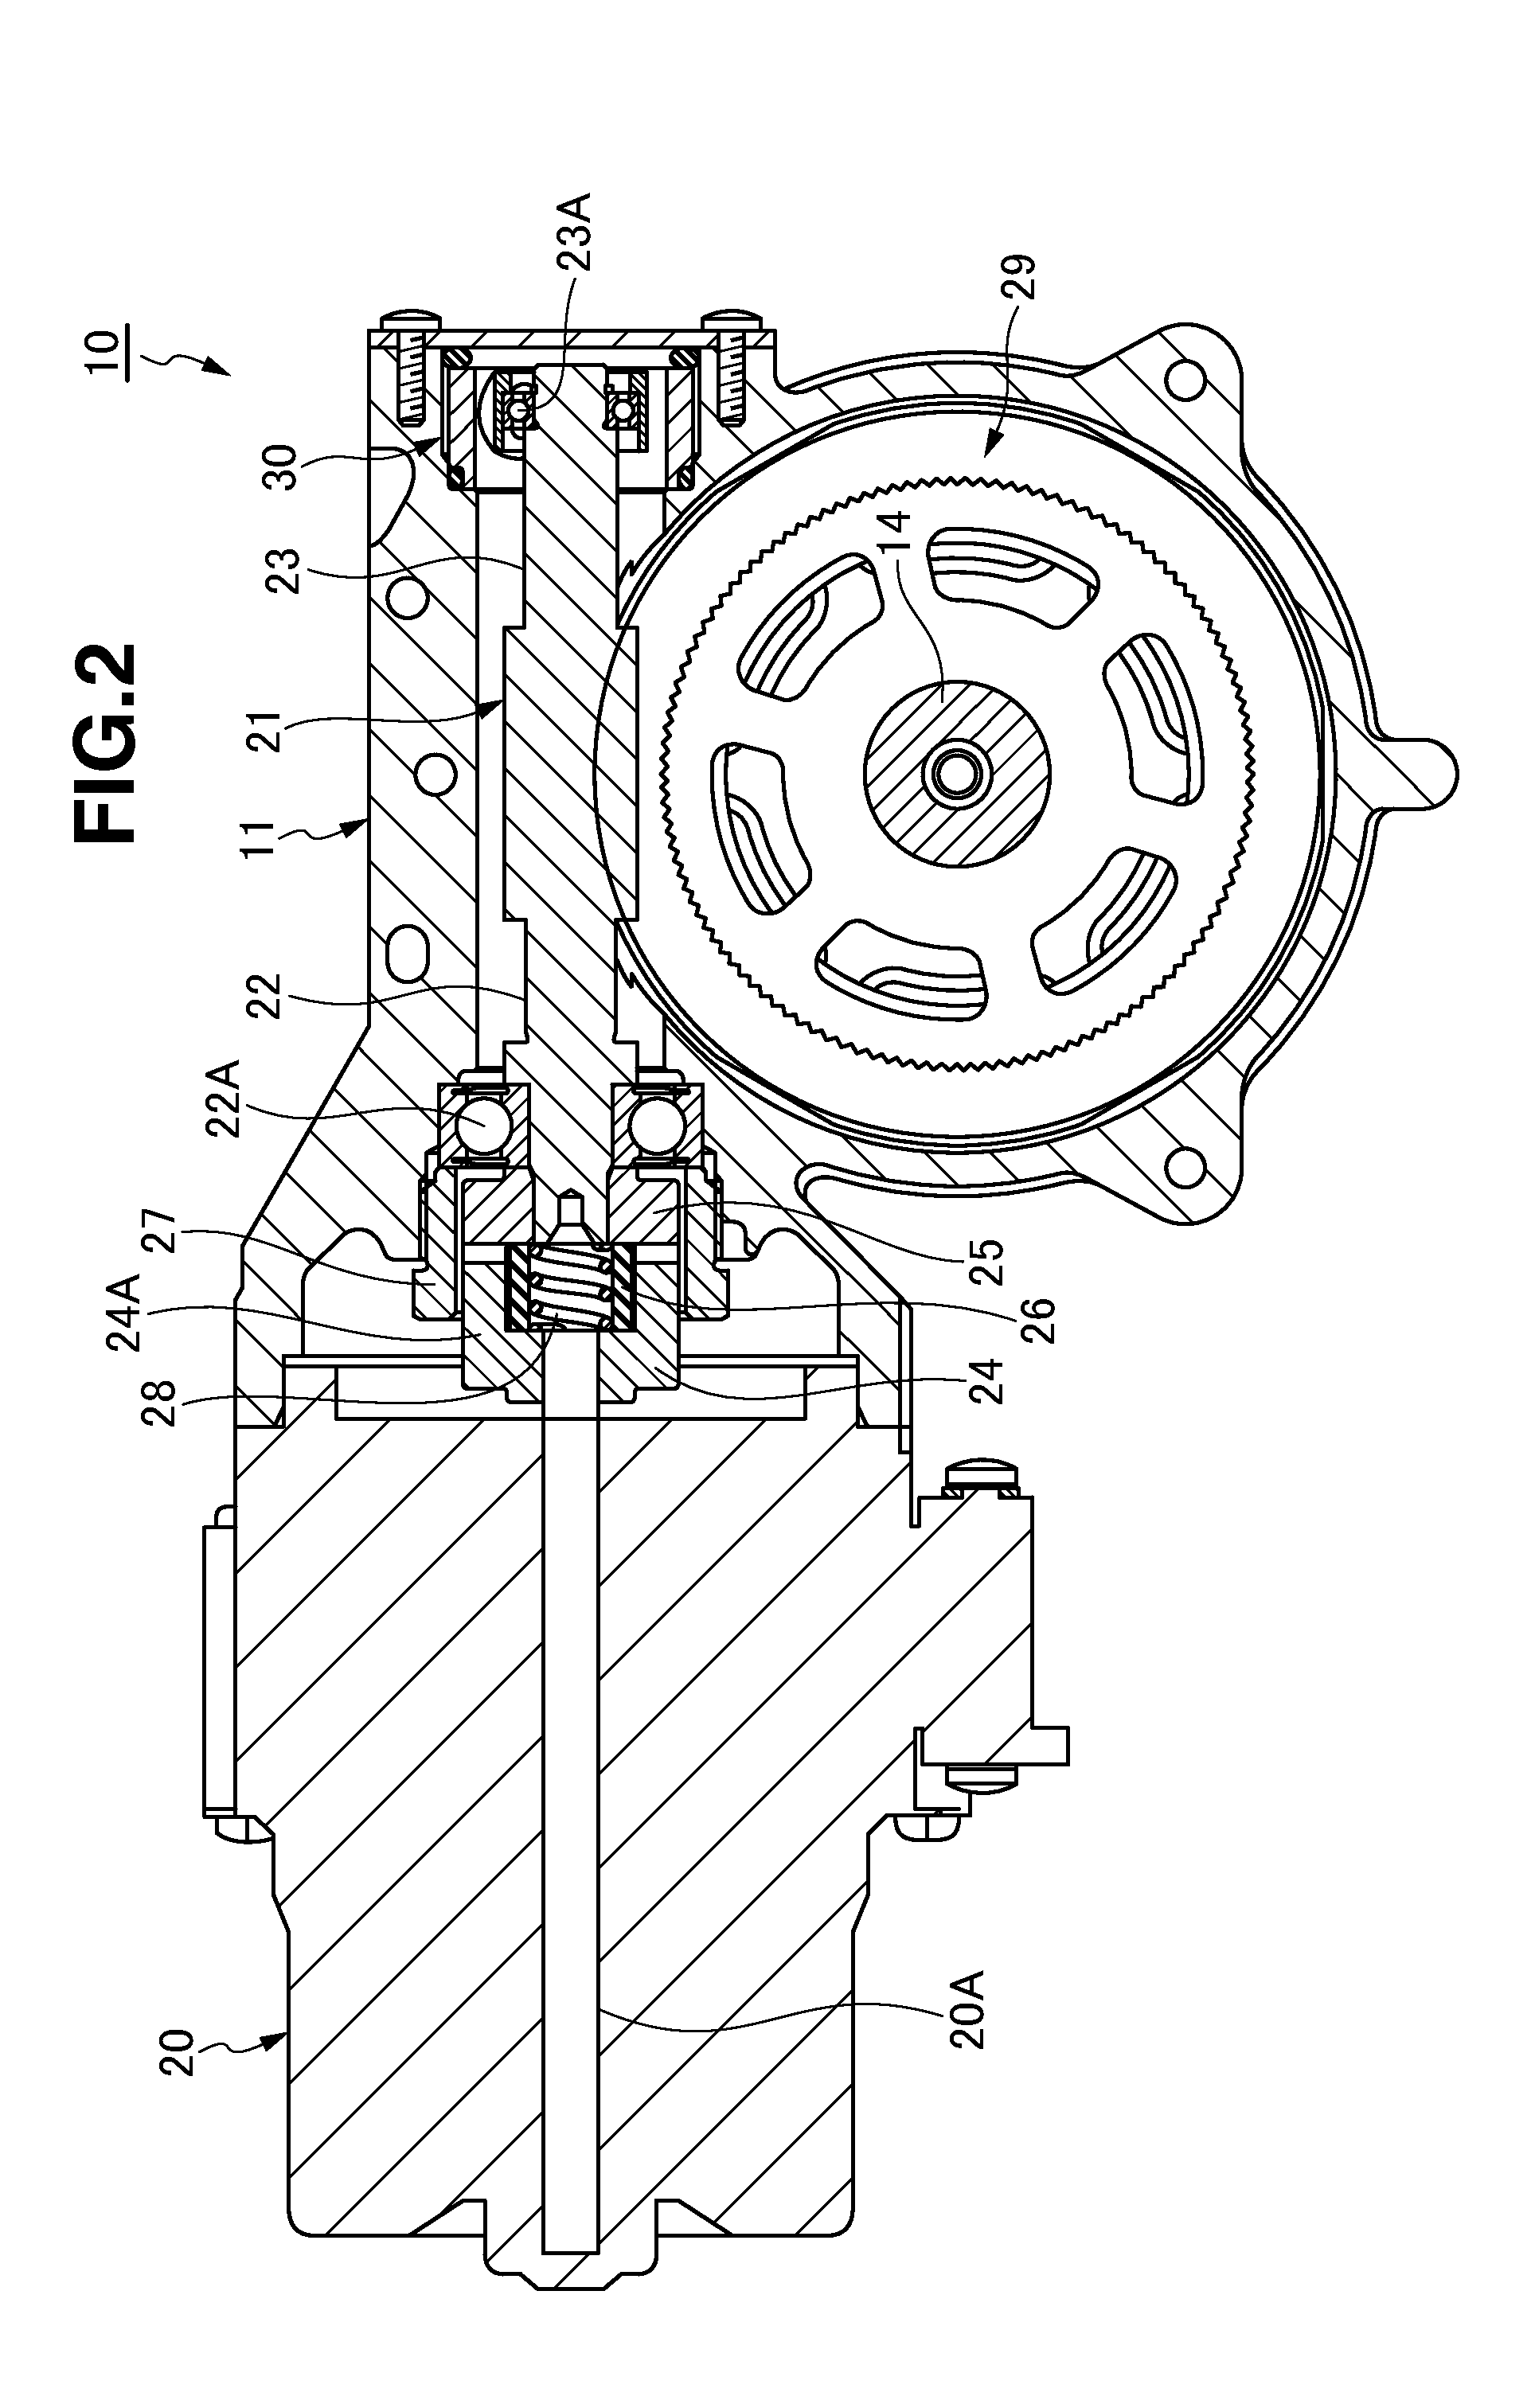 Motor-driven power steering apparatus